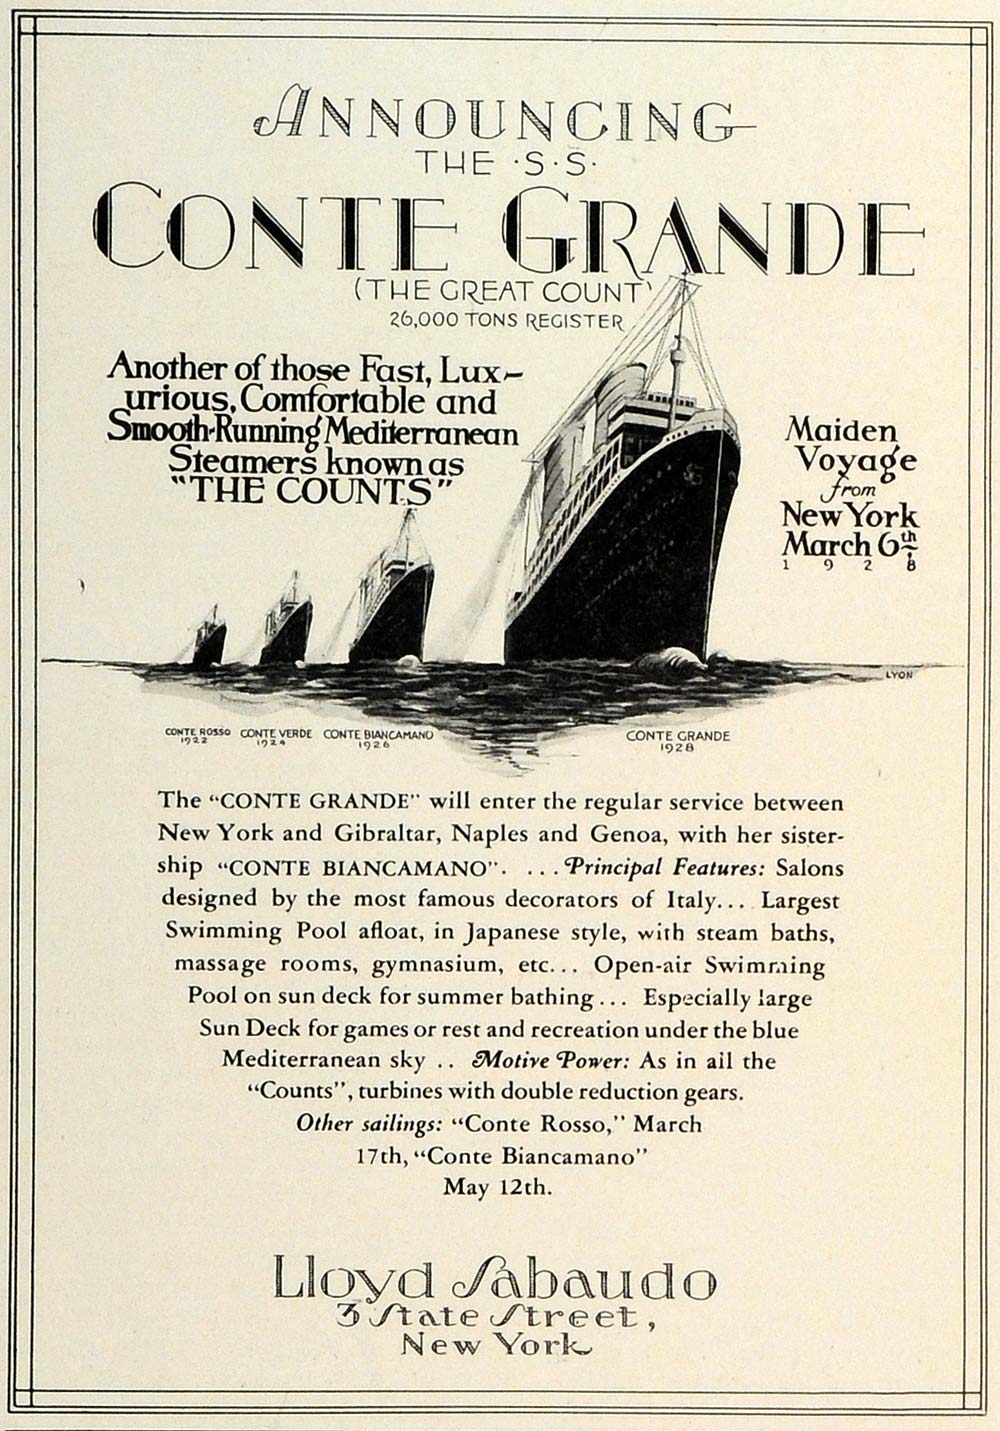 1928 Ad Lloyd Sabaudo Conte Grande Cruise Ships Tourism Conte Biancamano TRV1